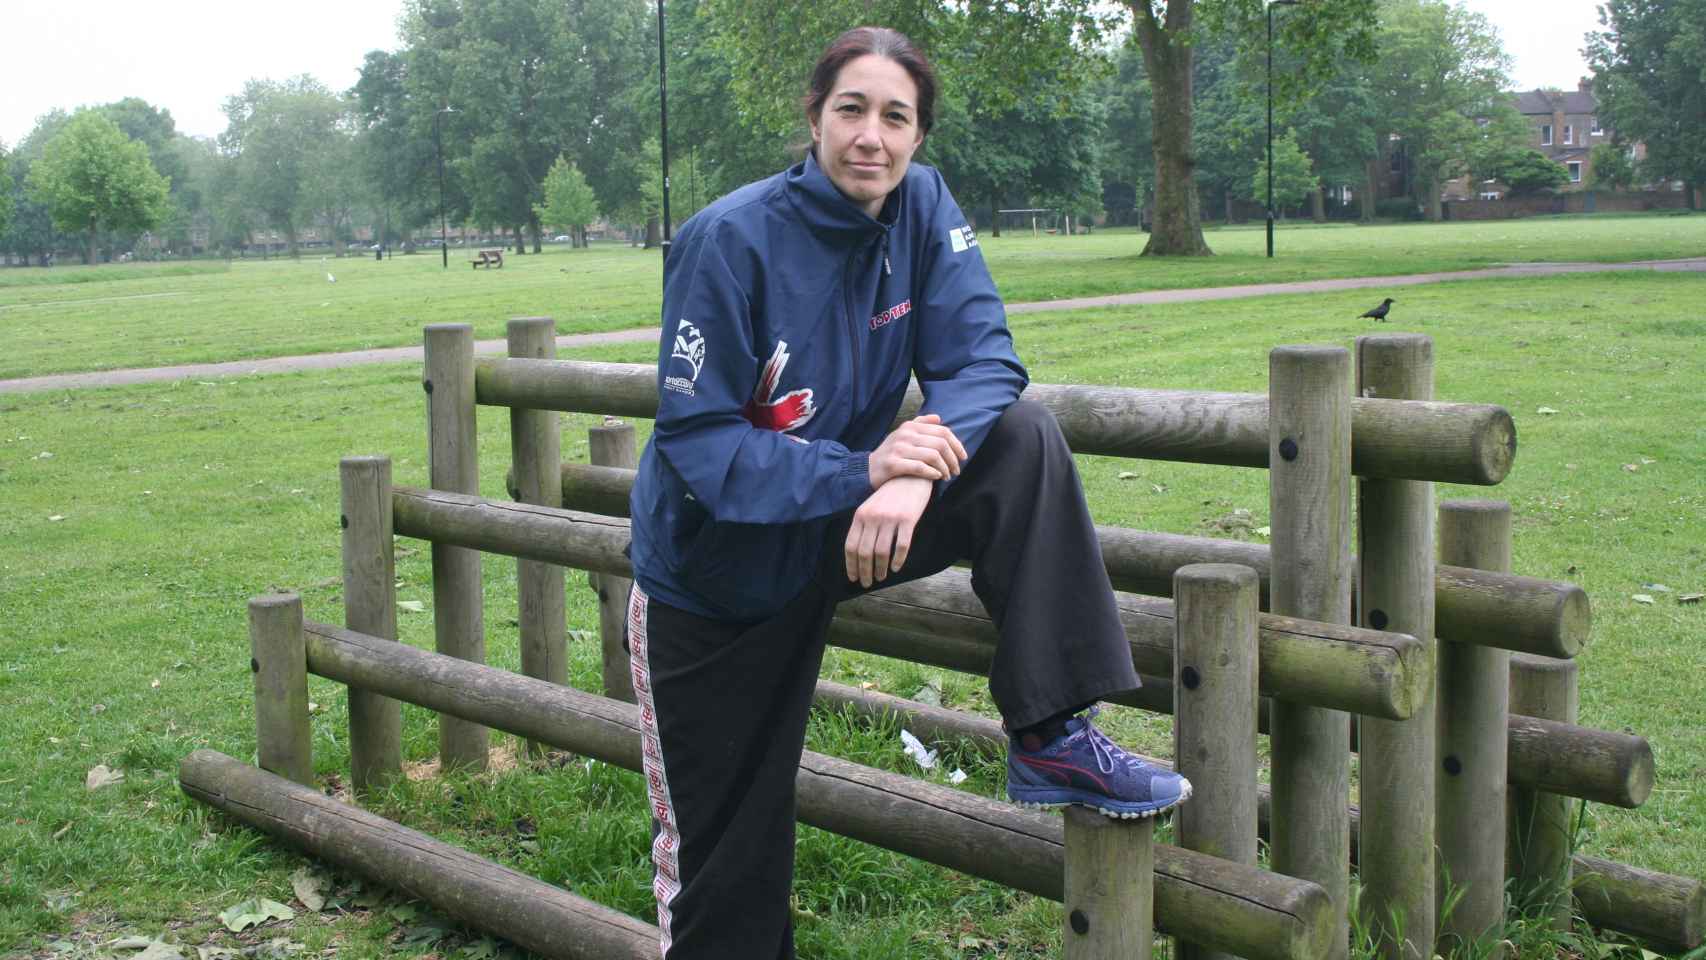 Maria Carrera, kickboxer